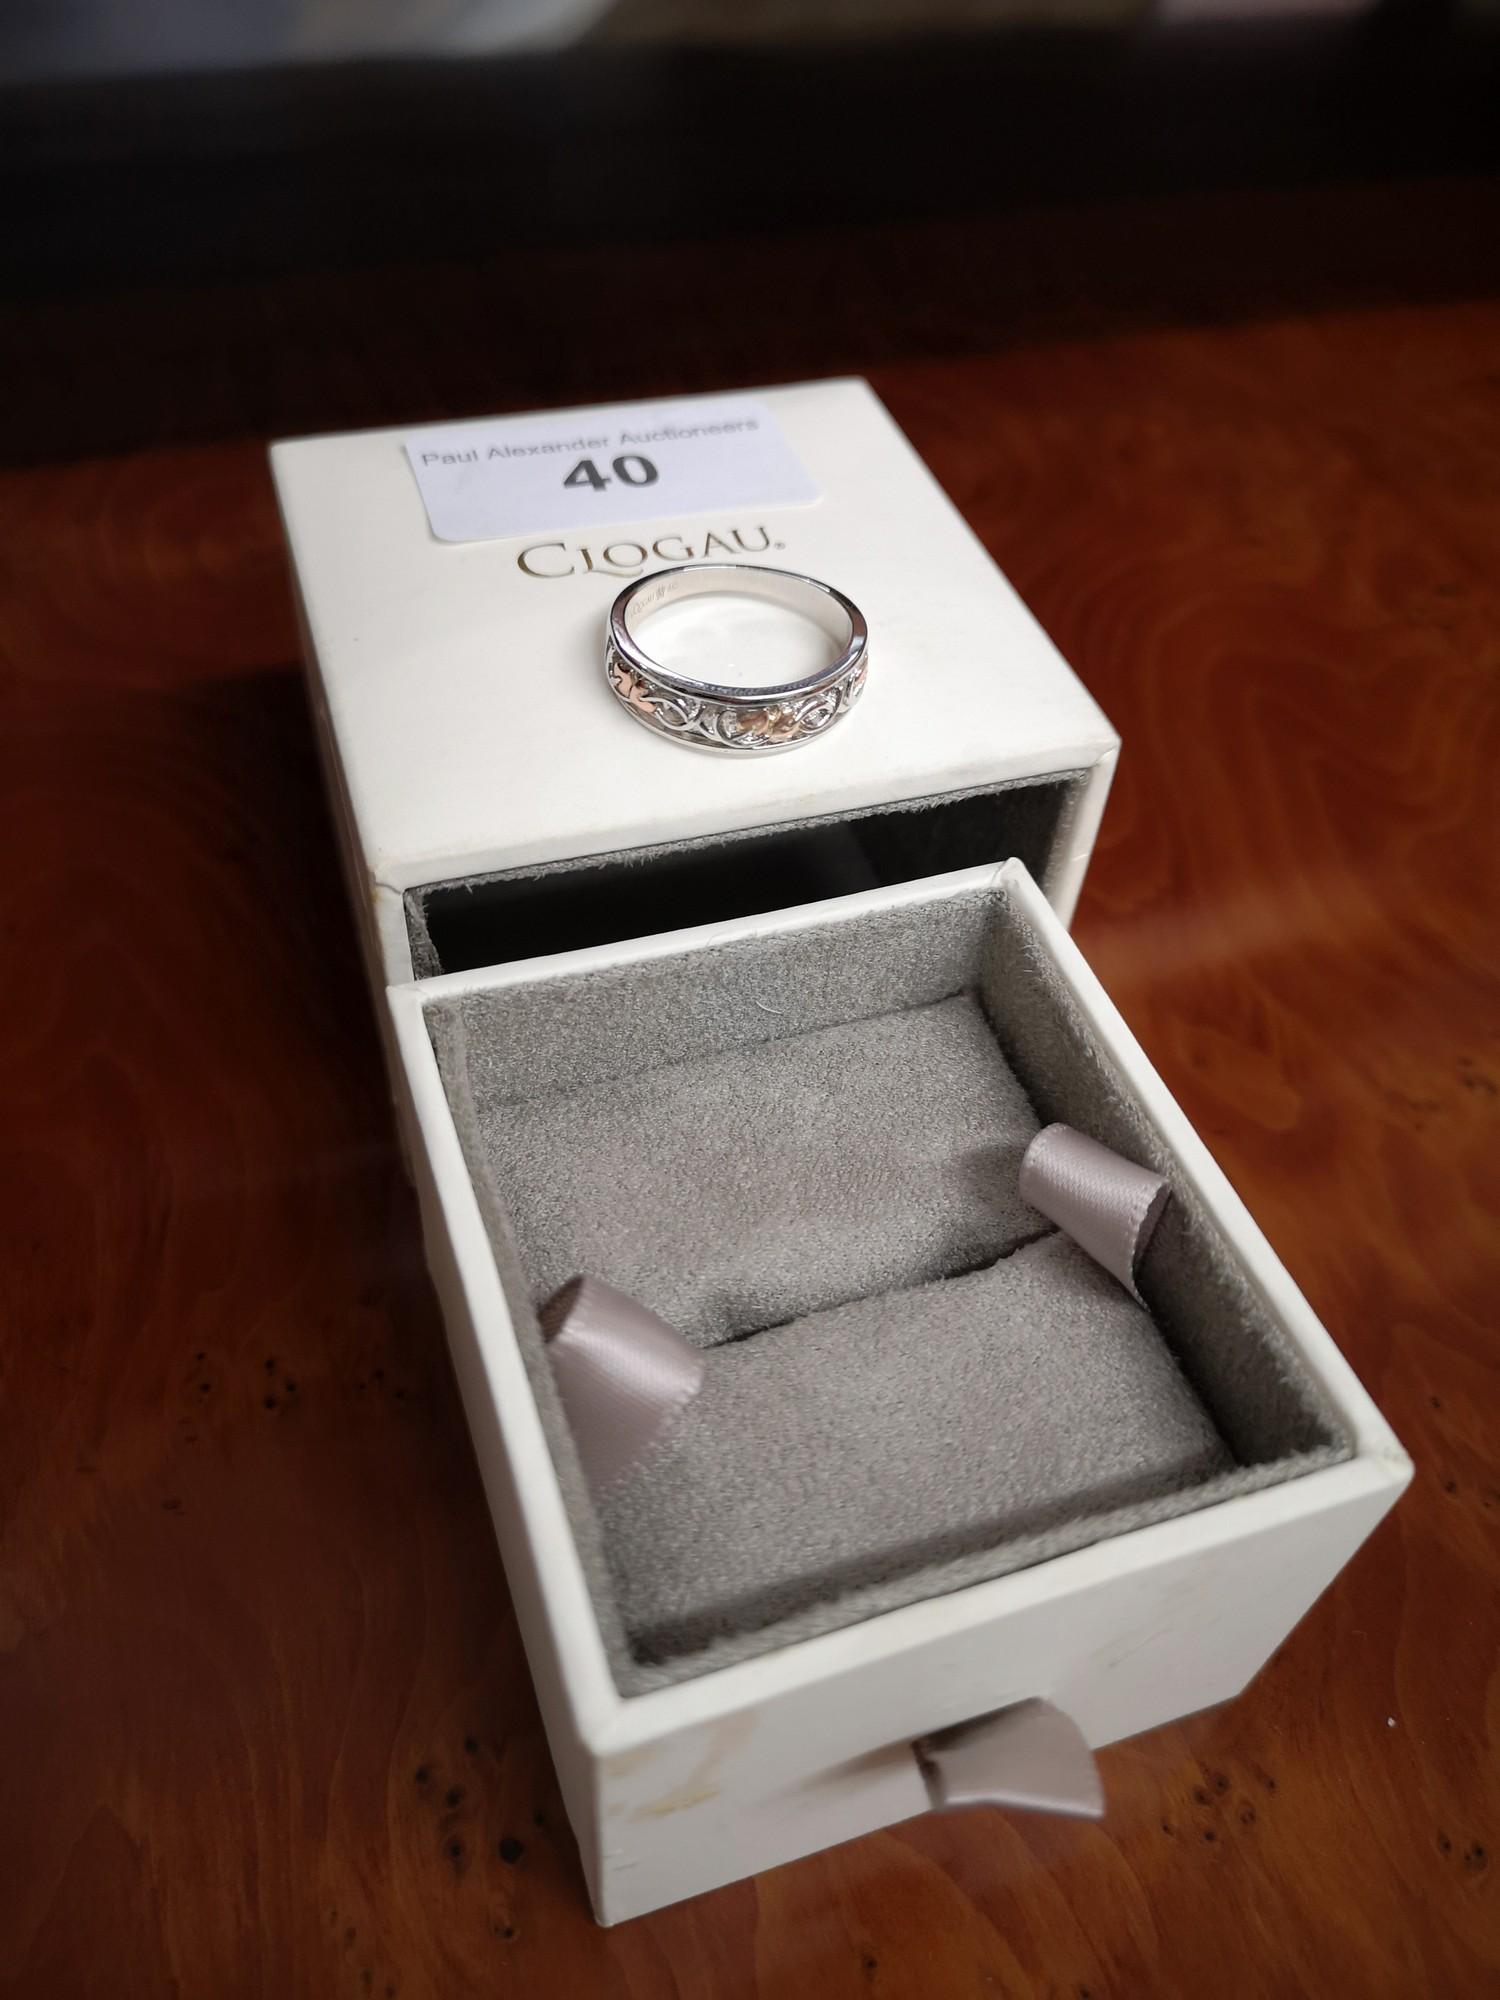 Glogau silver design ring with presentation box. - Image 2 of 2